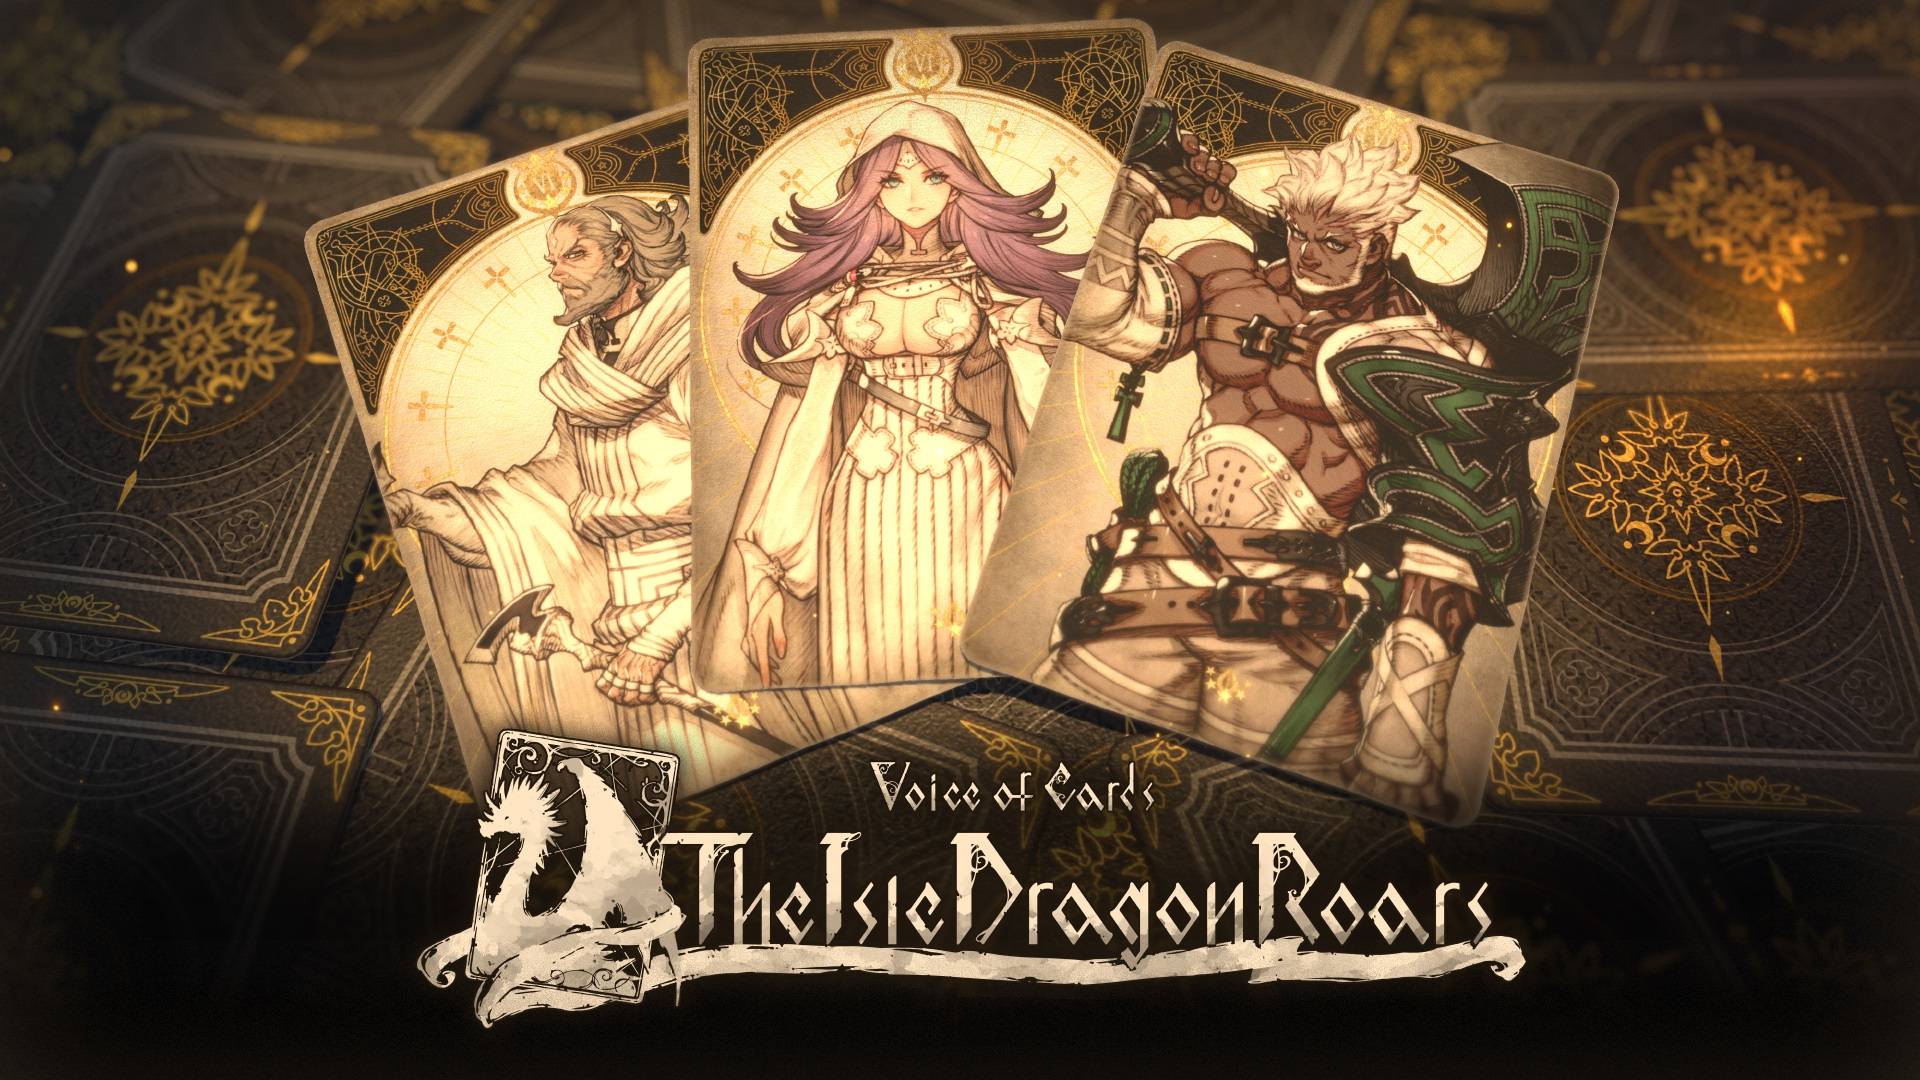 Обзор Voice of Cards: The Isle Dragon Roars. Карточная jRPG с рейтингом 6+ от Ёко Таро 2